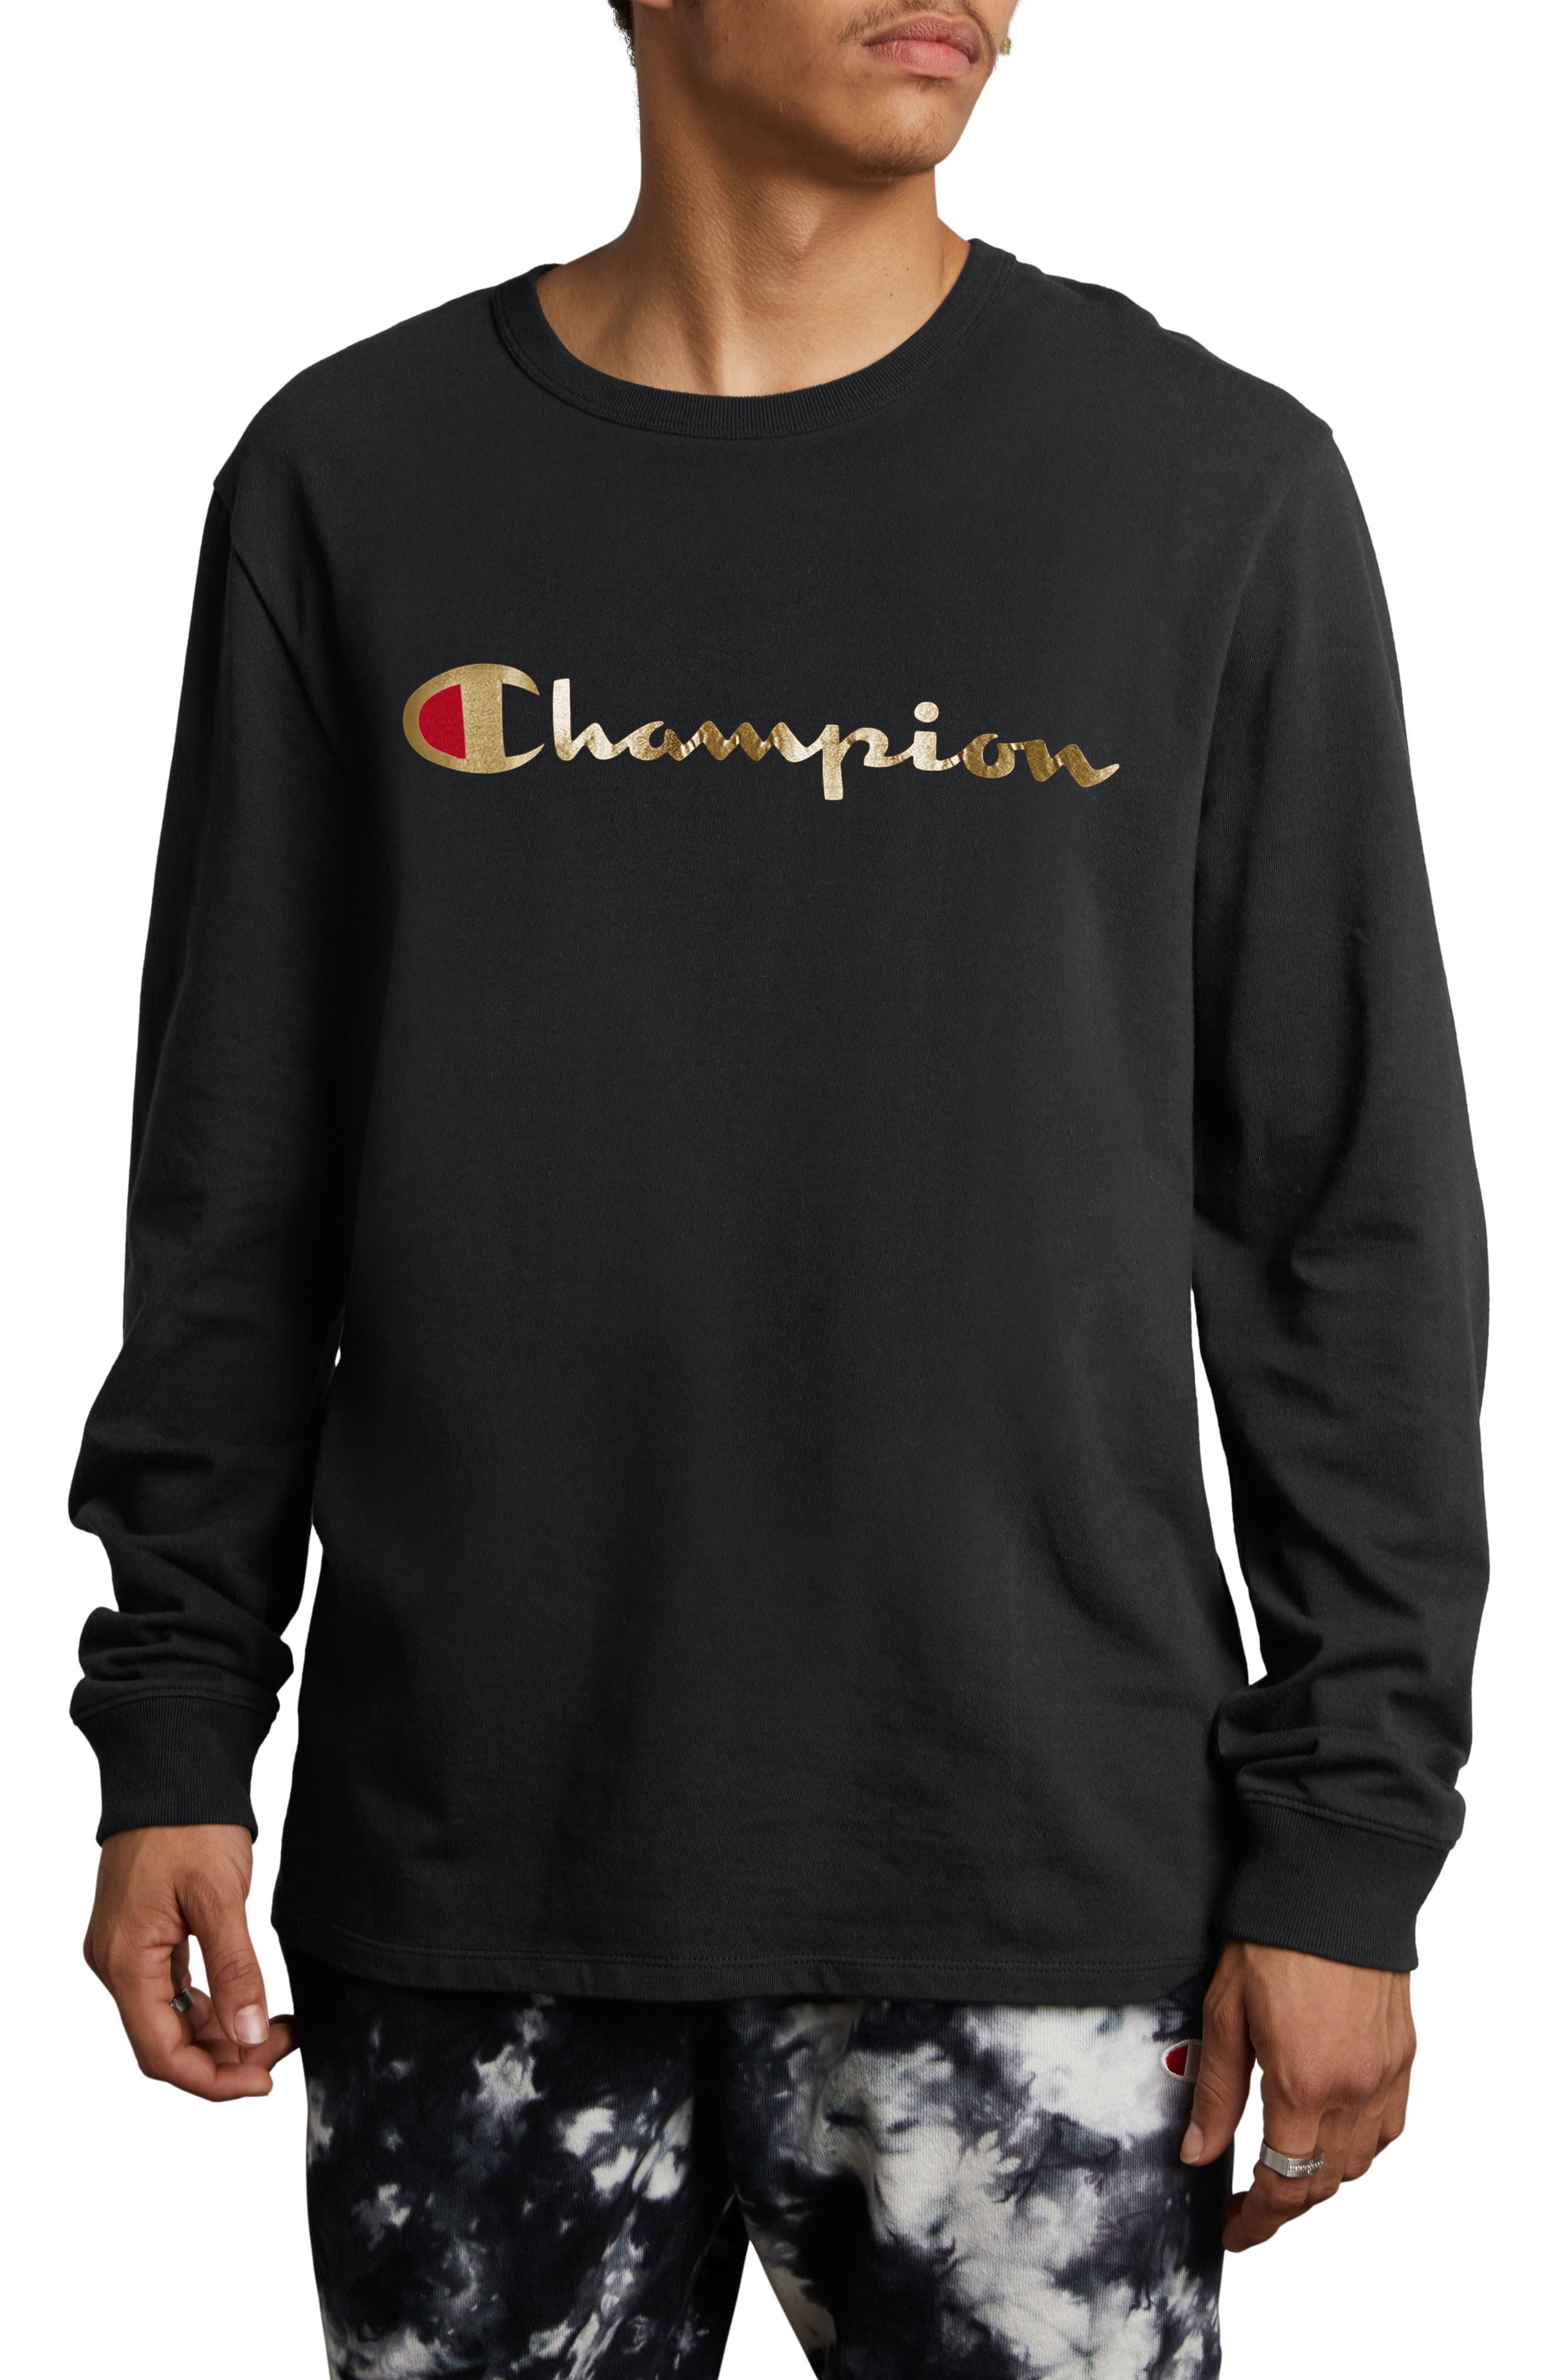 black and gold champion sweatshirt